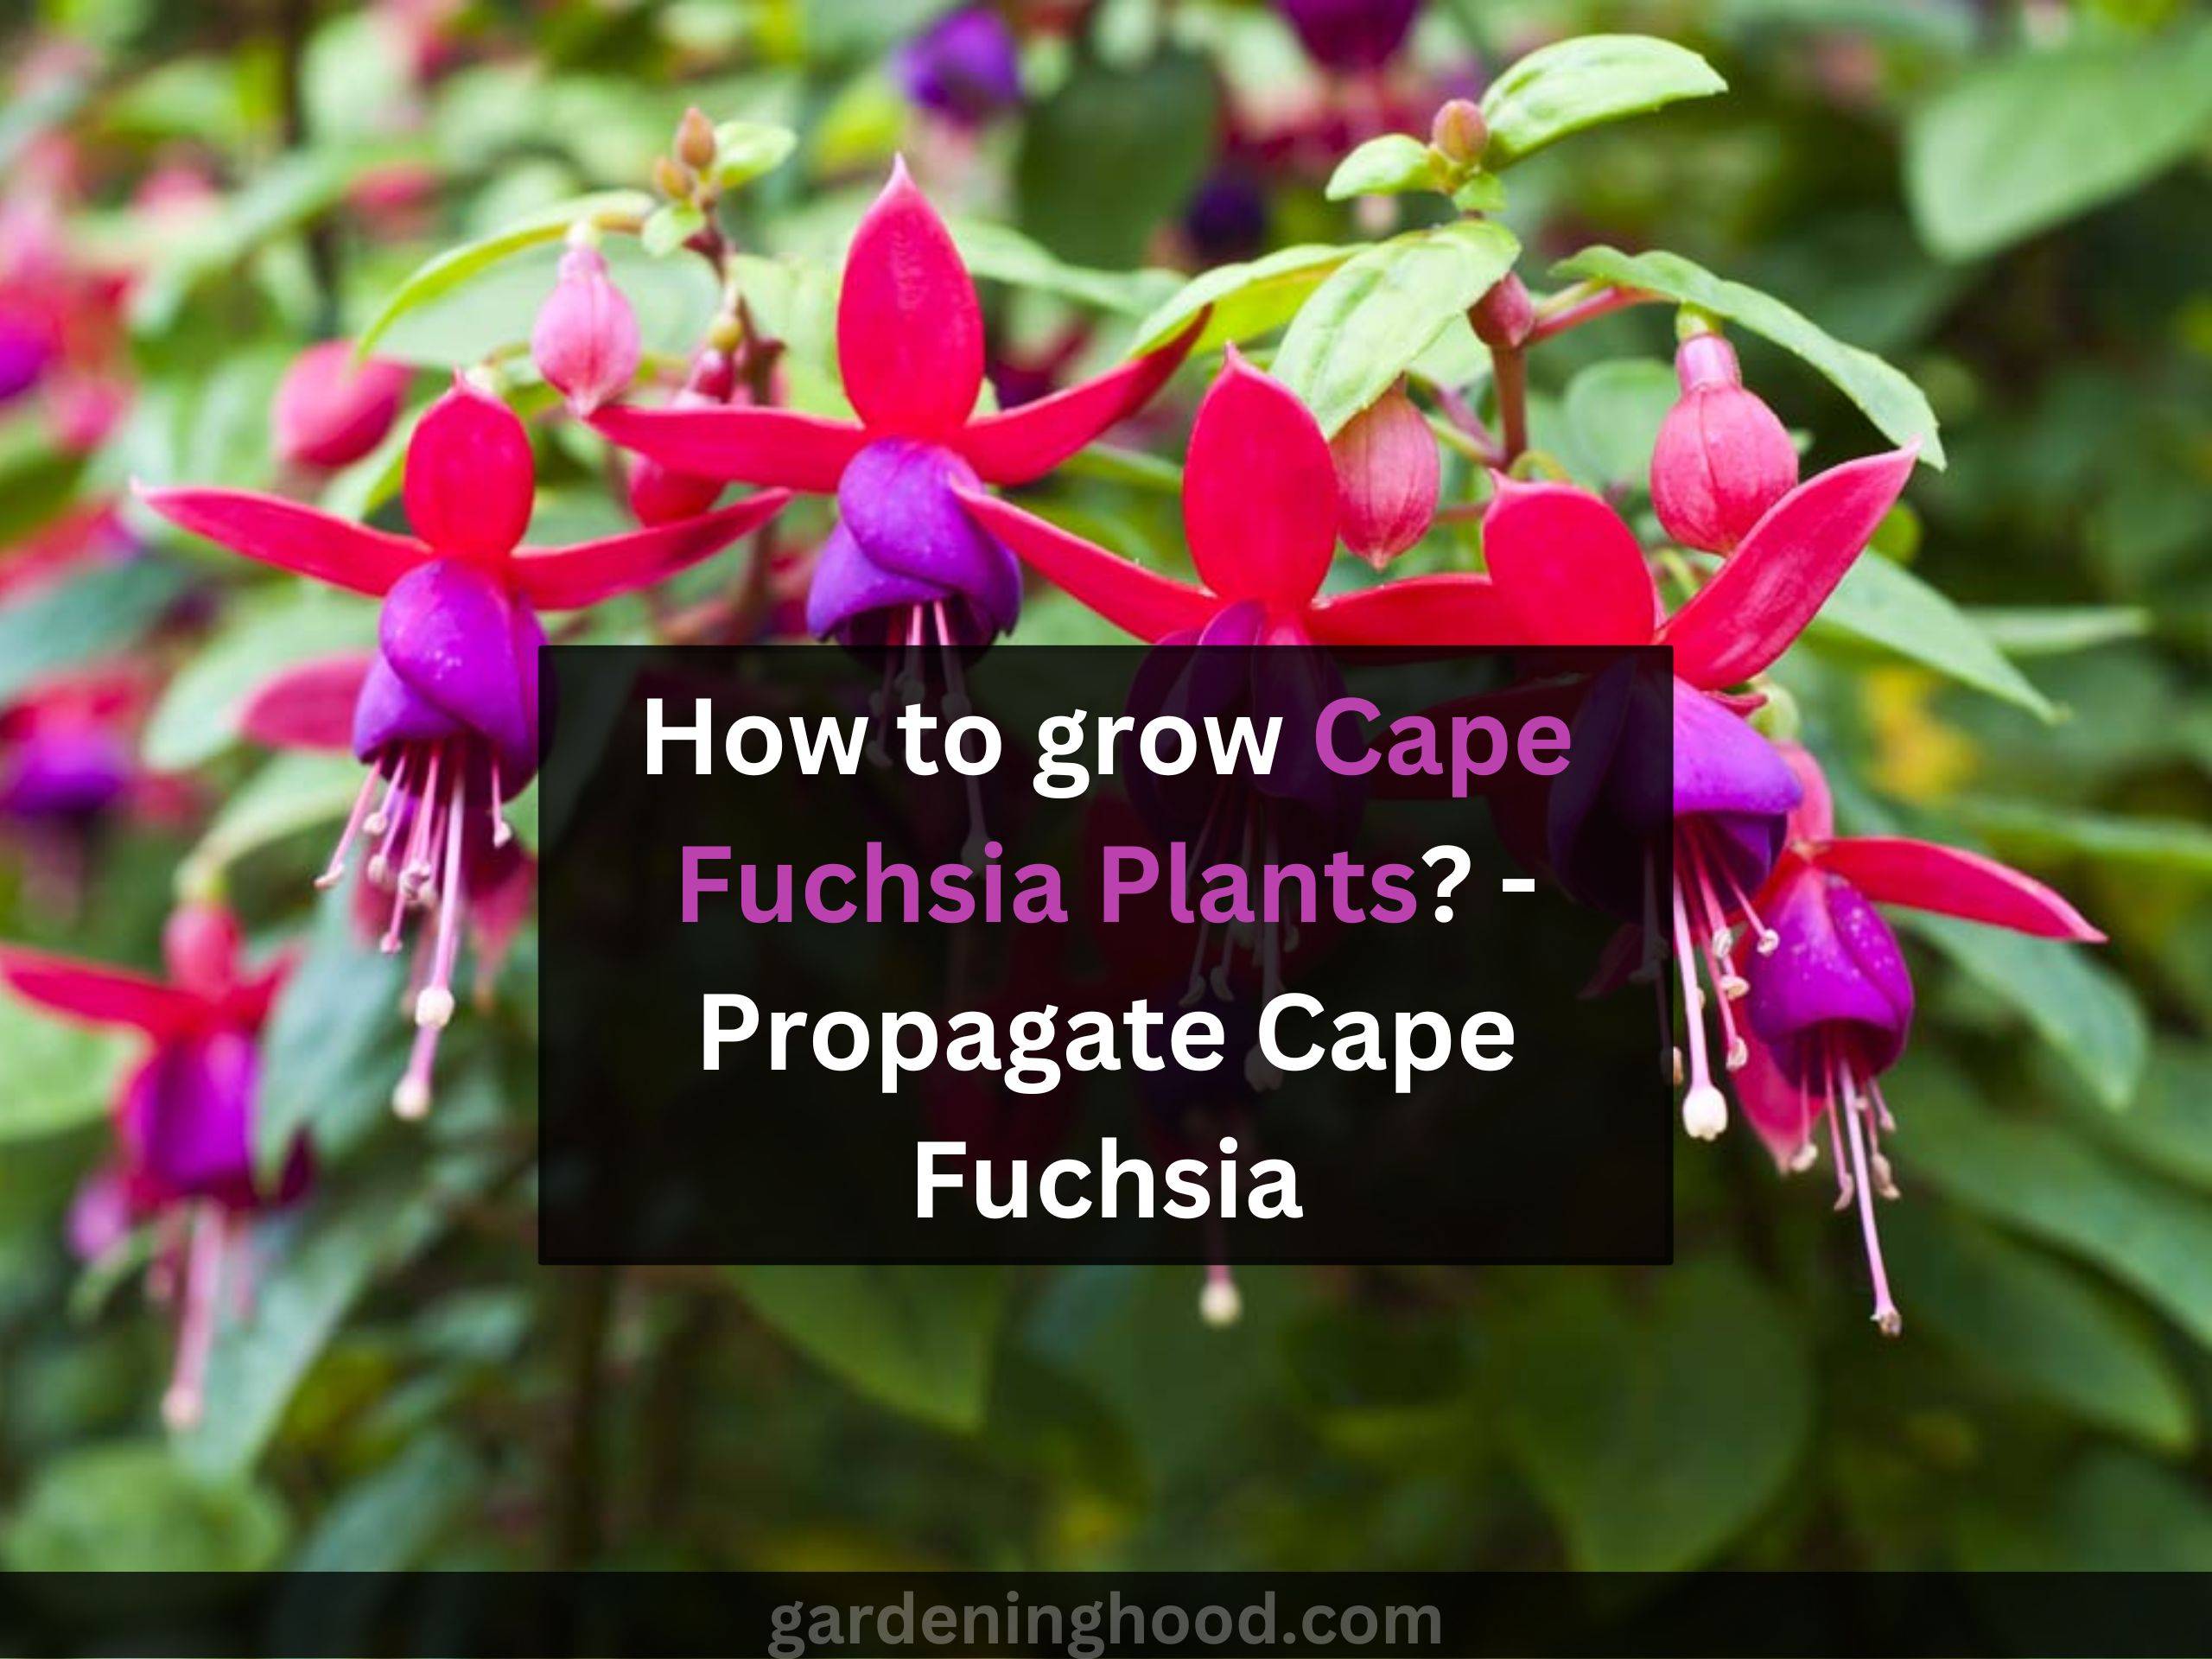 How to grow Cape Fuchsia Plants? - Propagate Cape Fuchsia